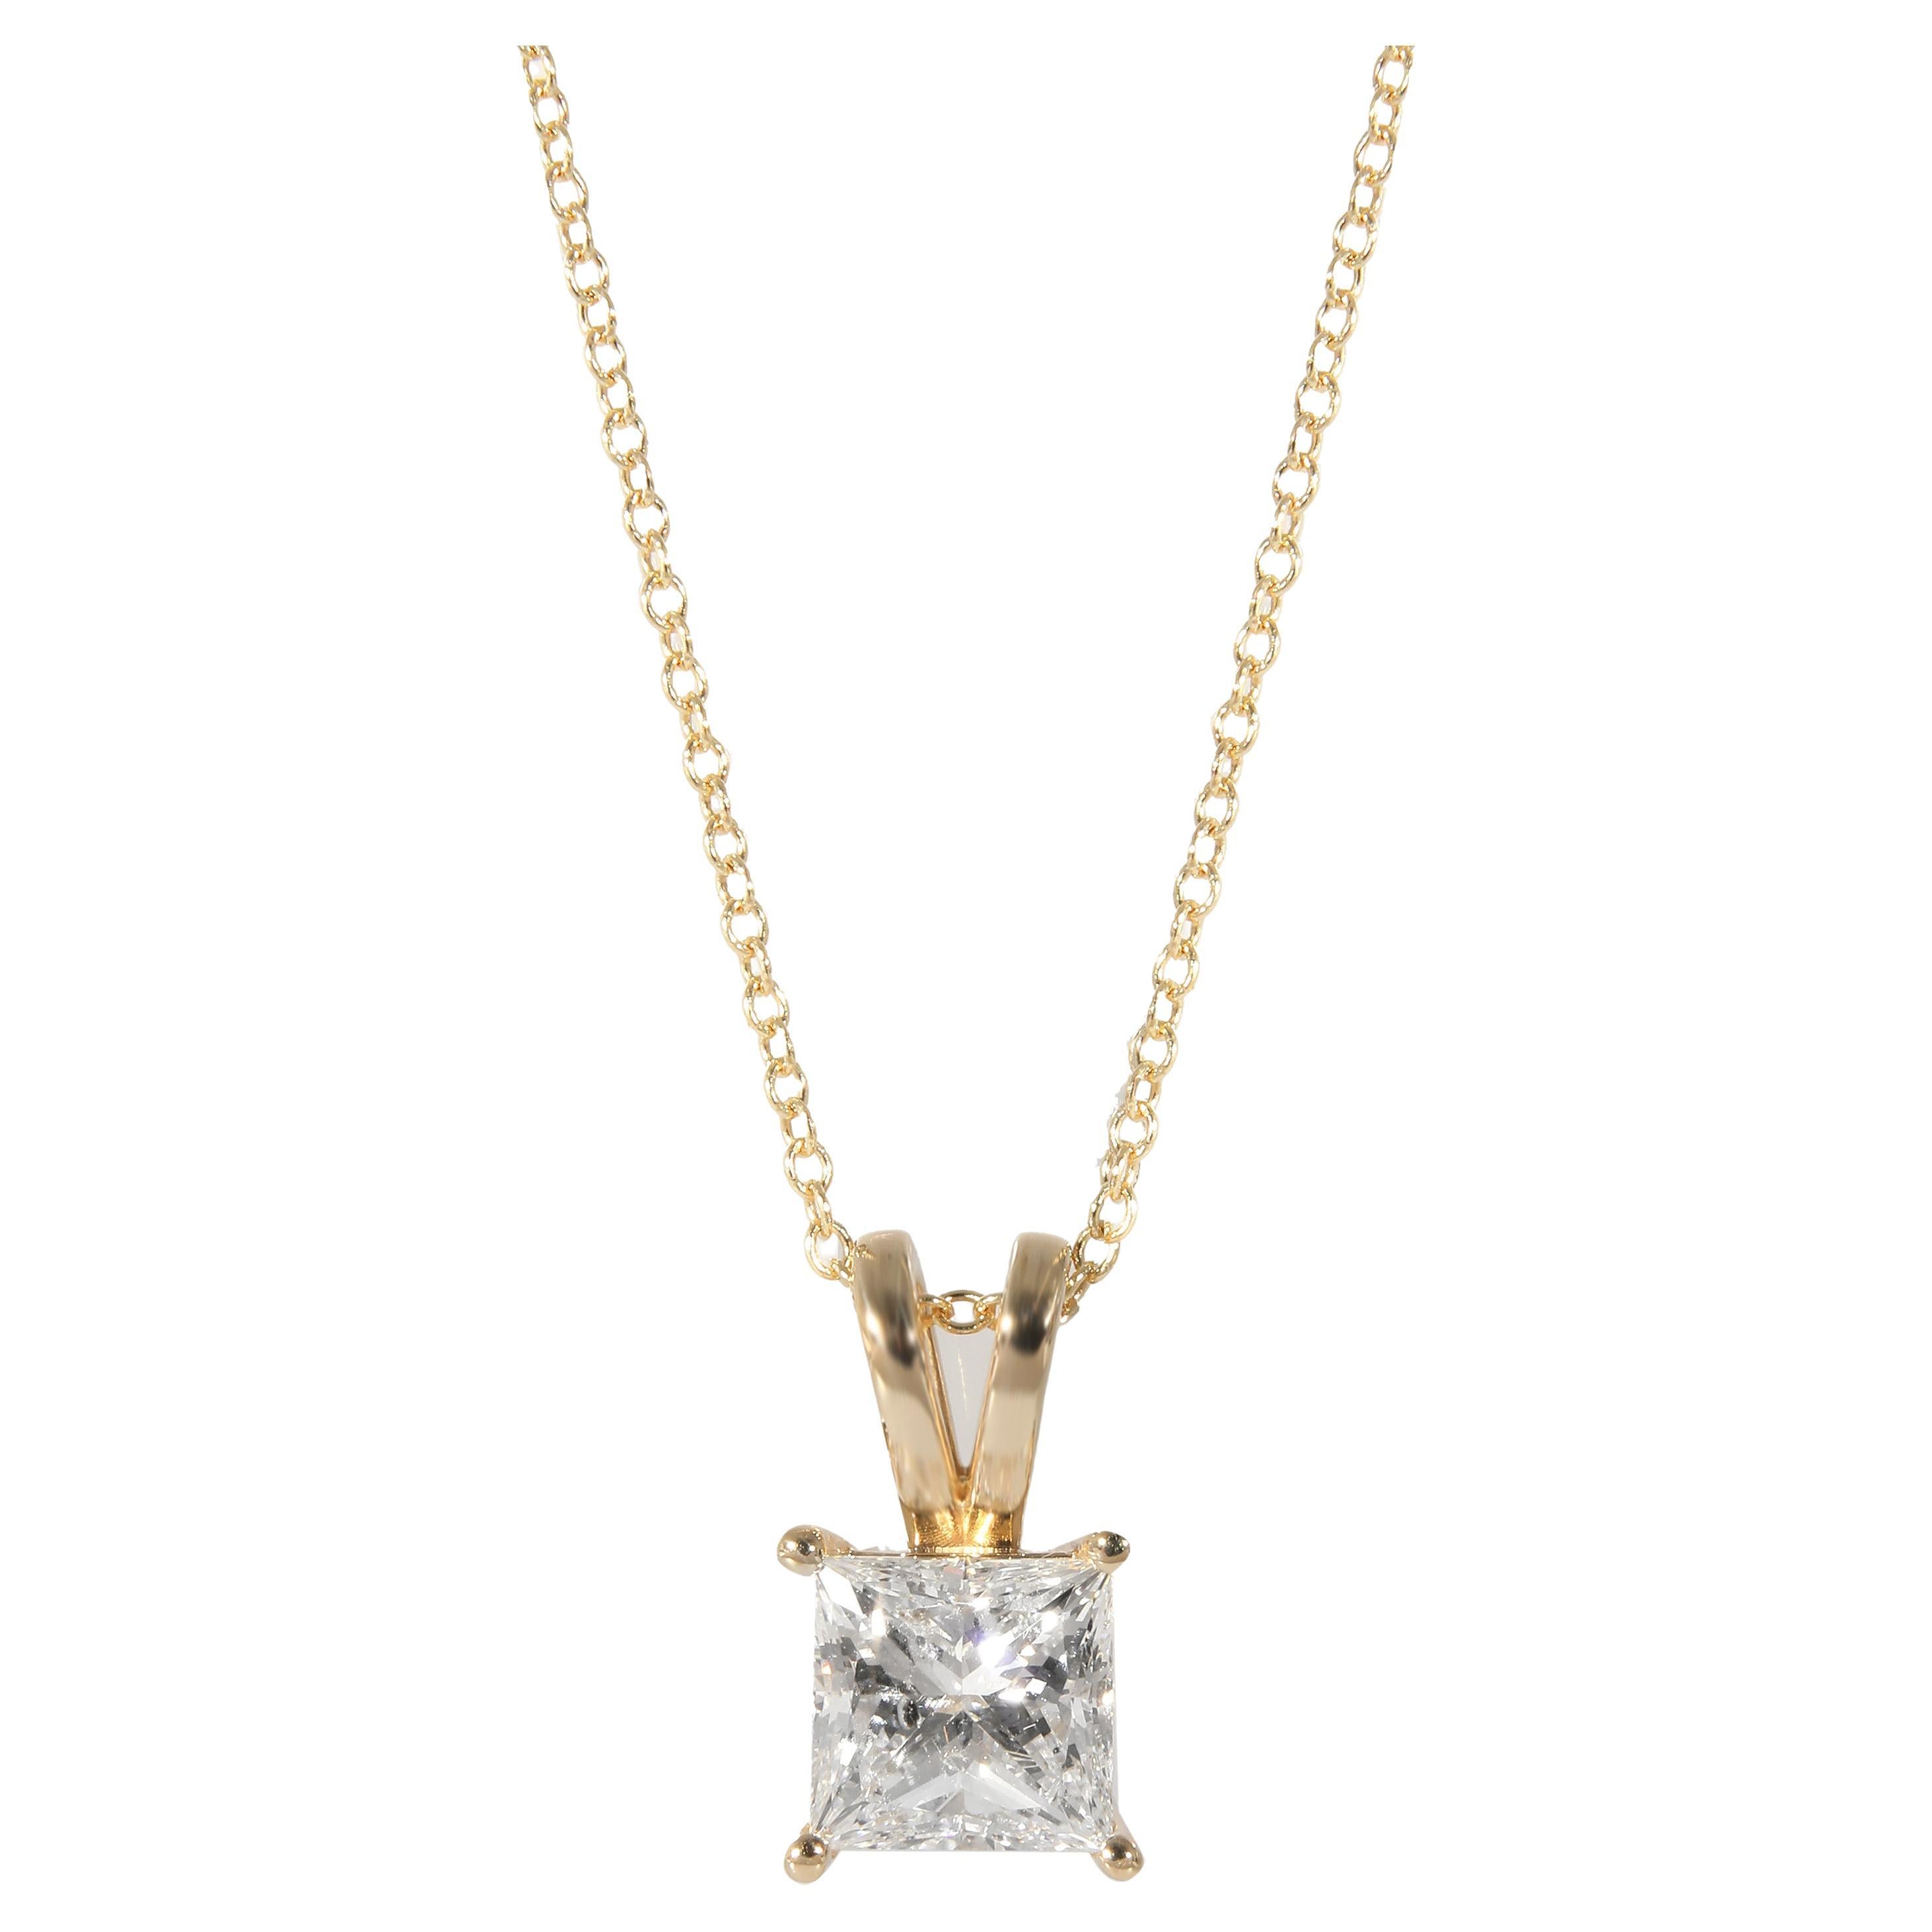 Princess Solitaire Diamond Pendant in 14K Yellow Gold (1.81 CTW)